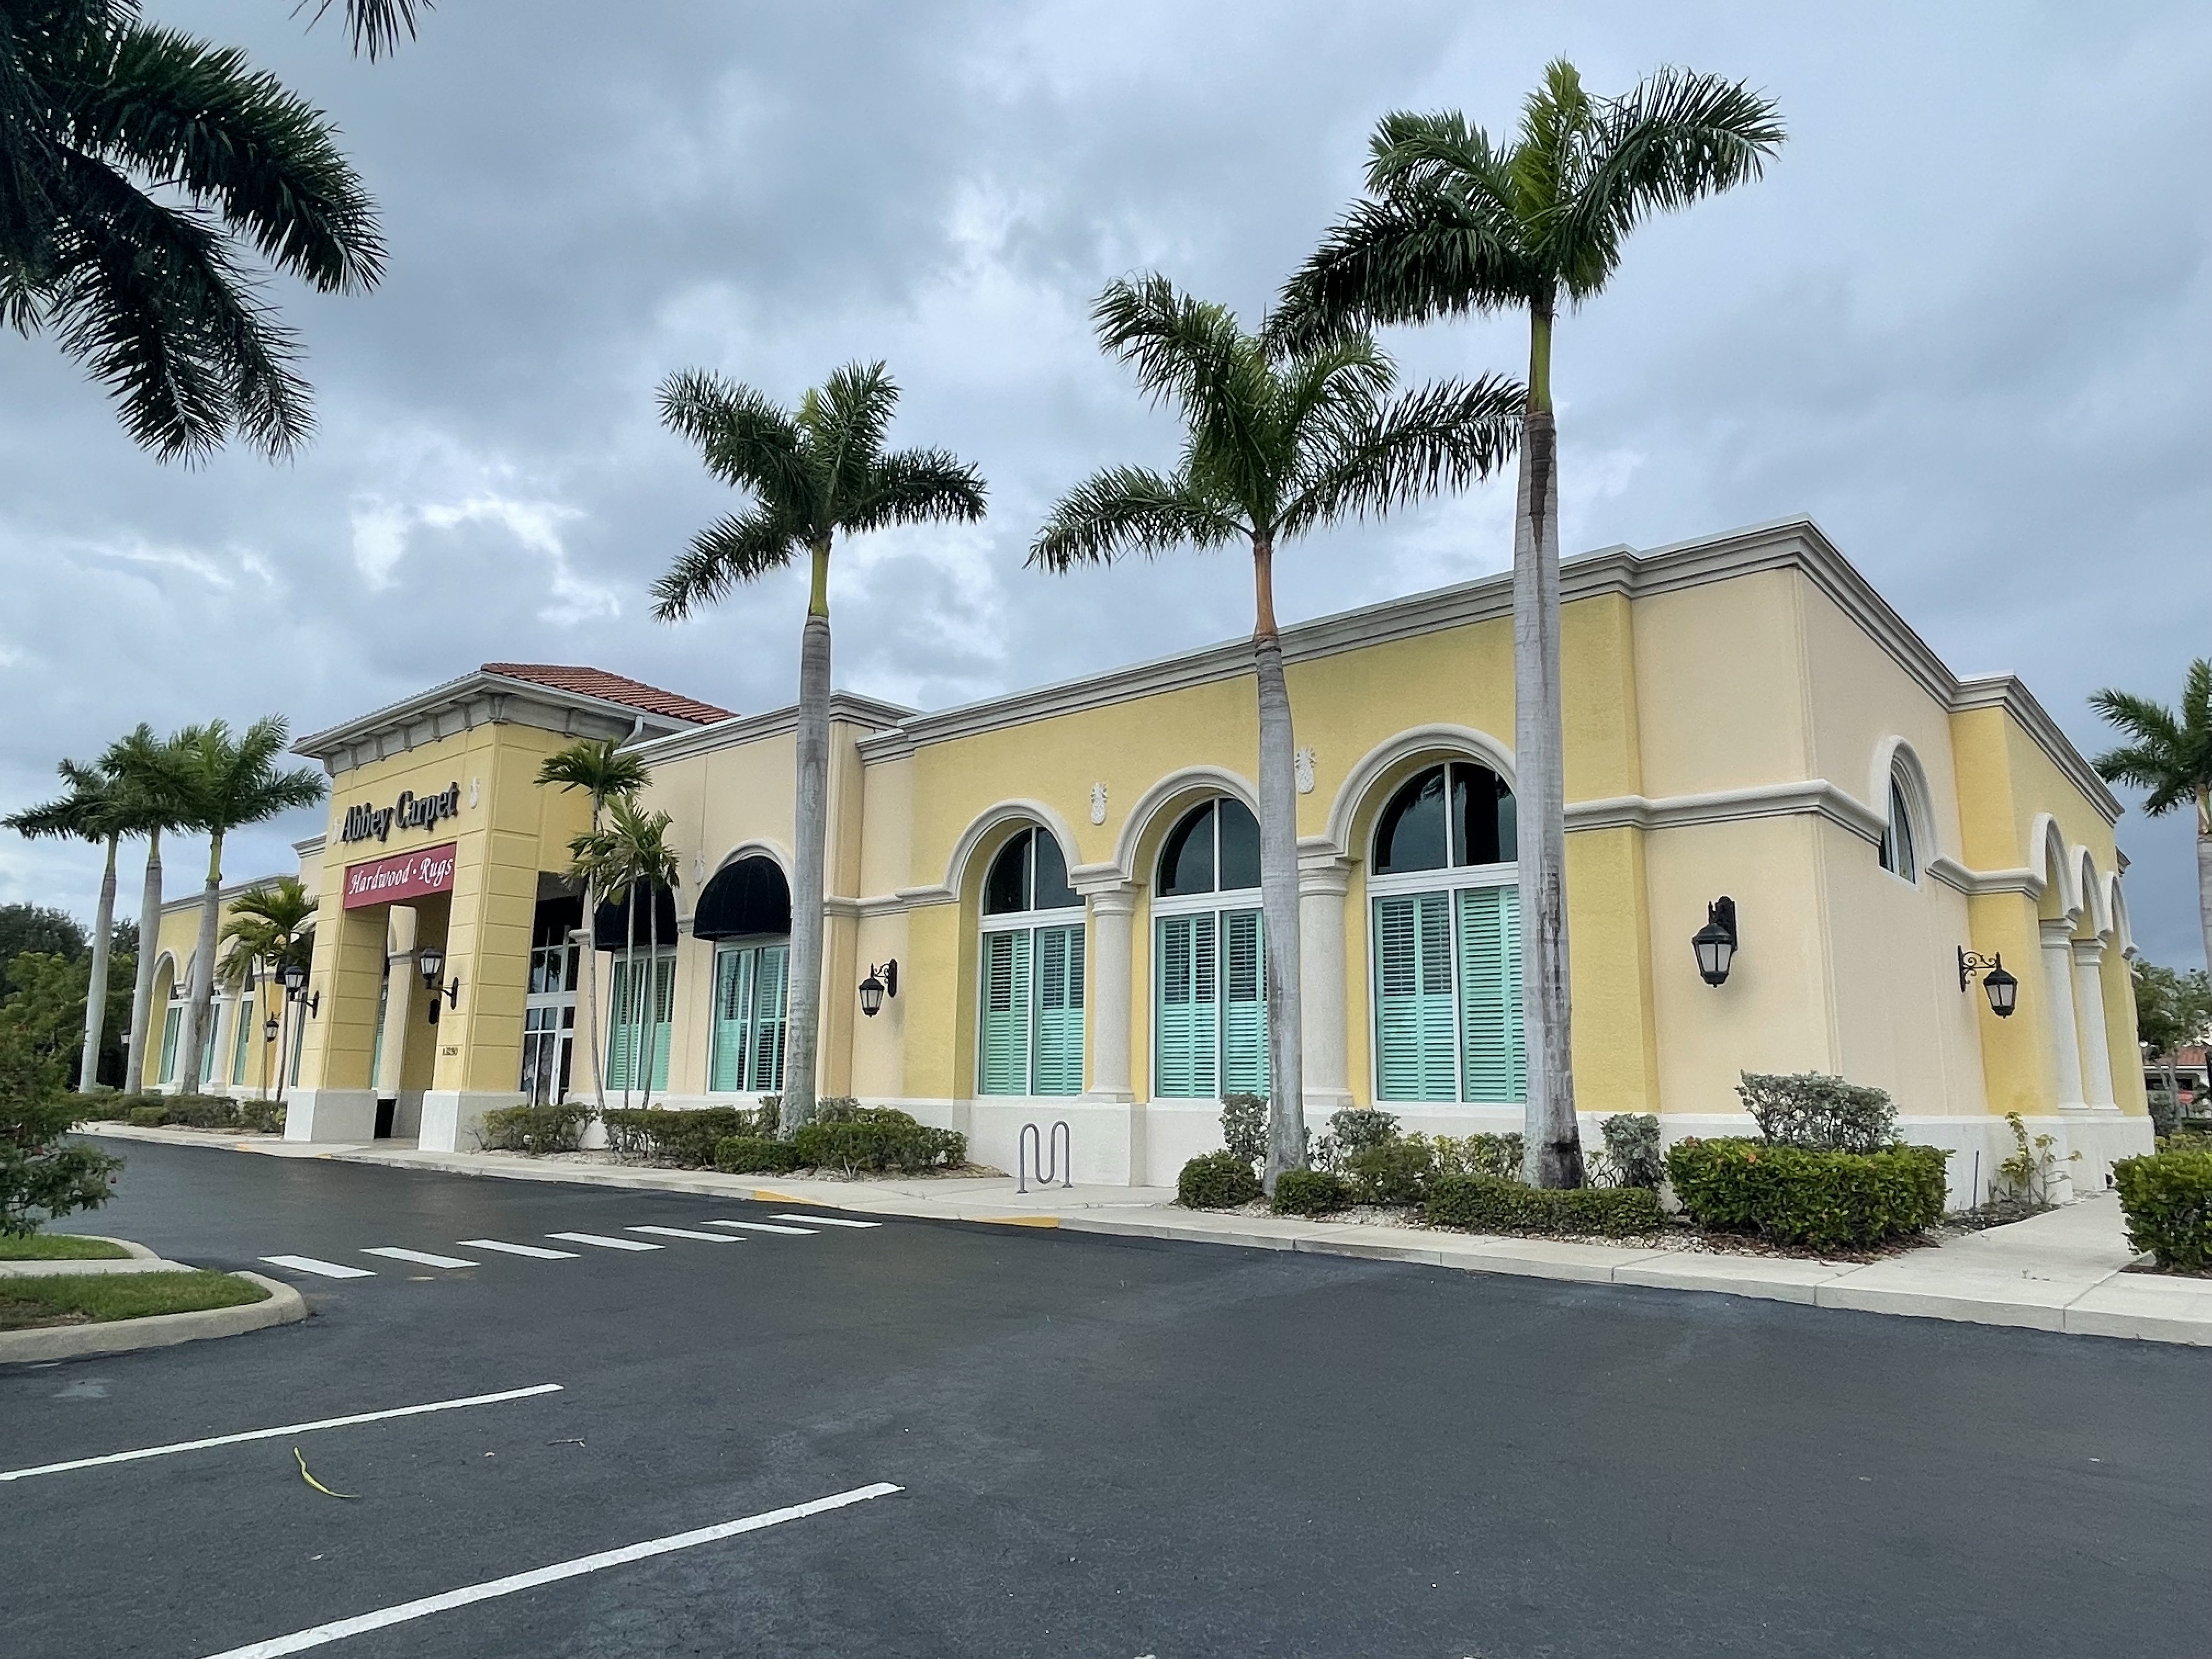 Abbey Carpet - Naples Florida Store